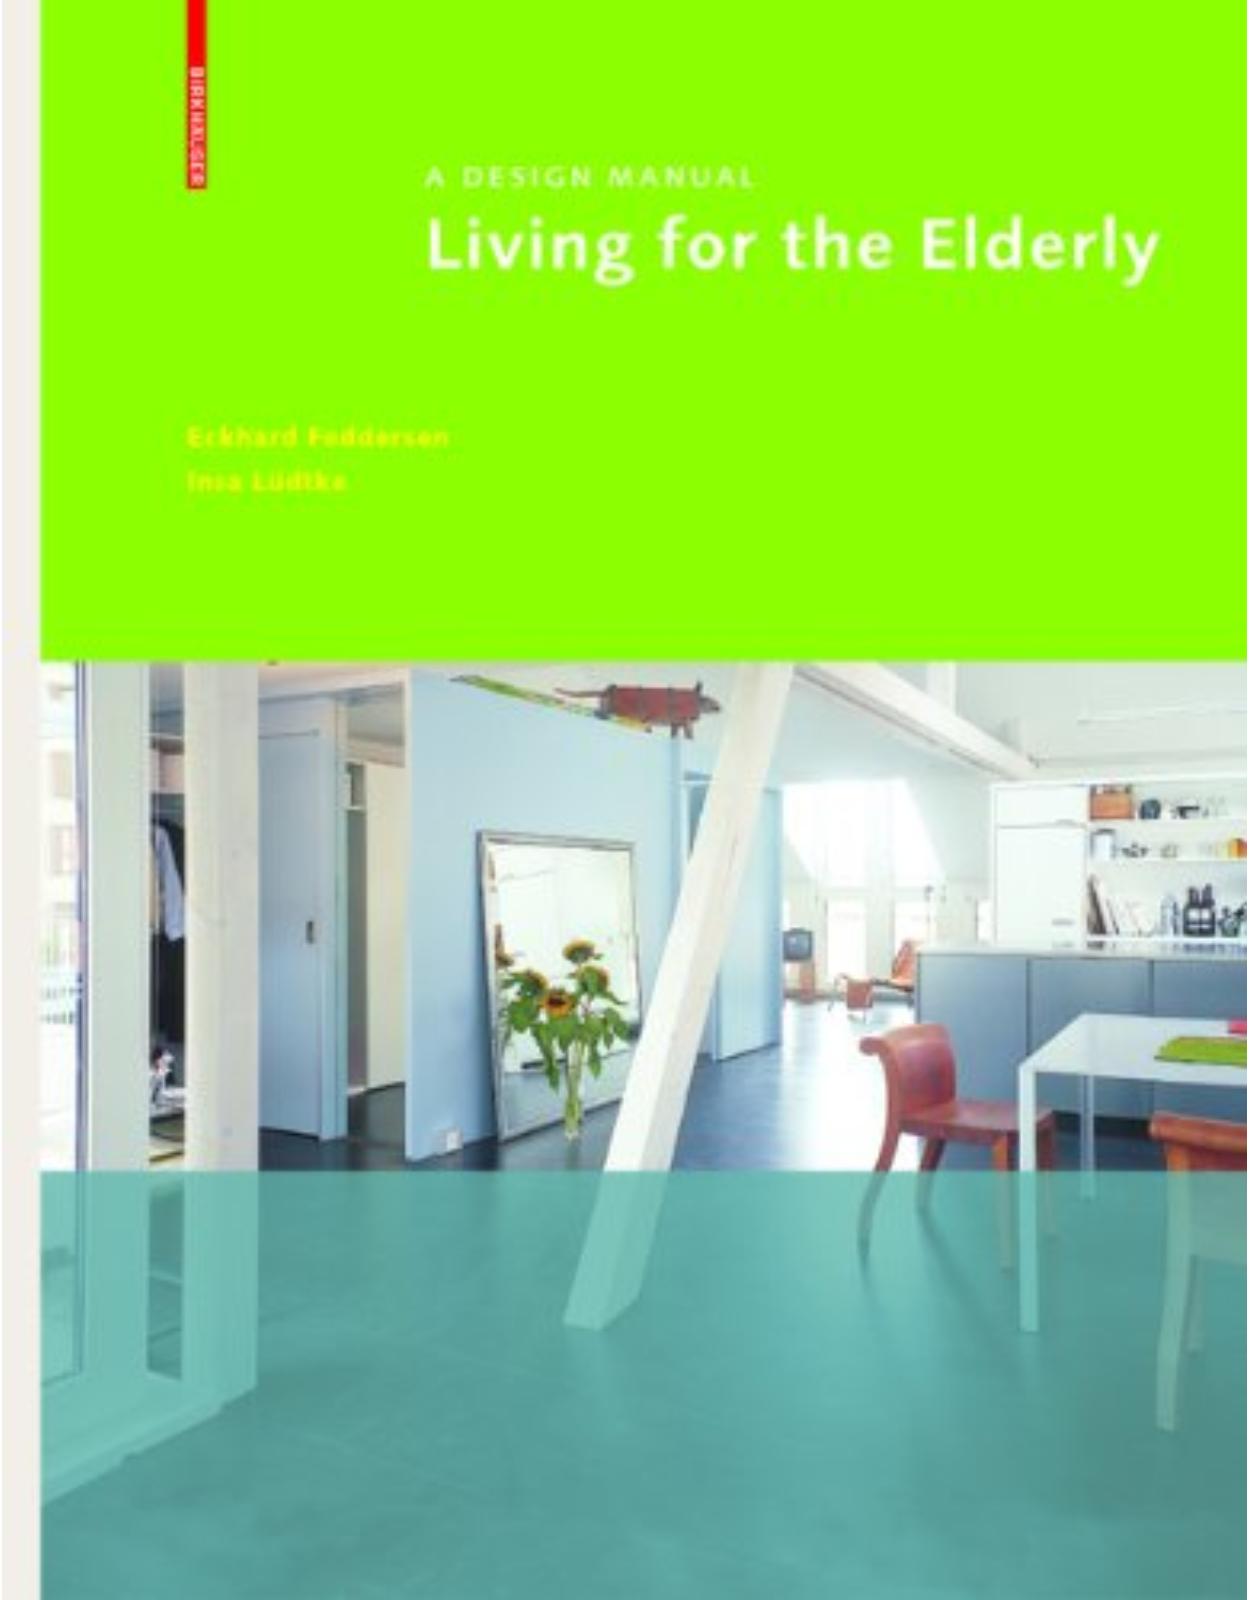 Living for the Elderly: A Design Manual (Design Manuals)